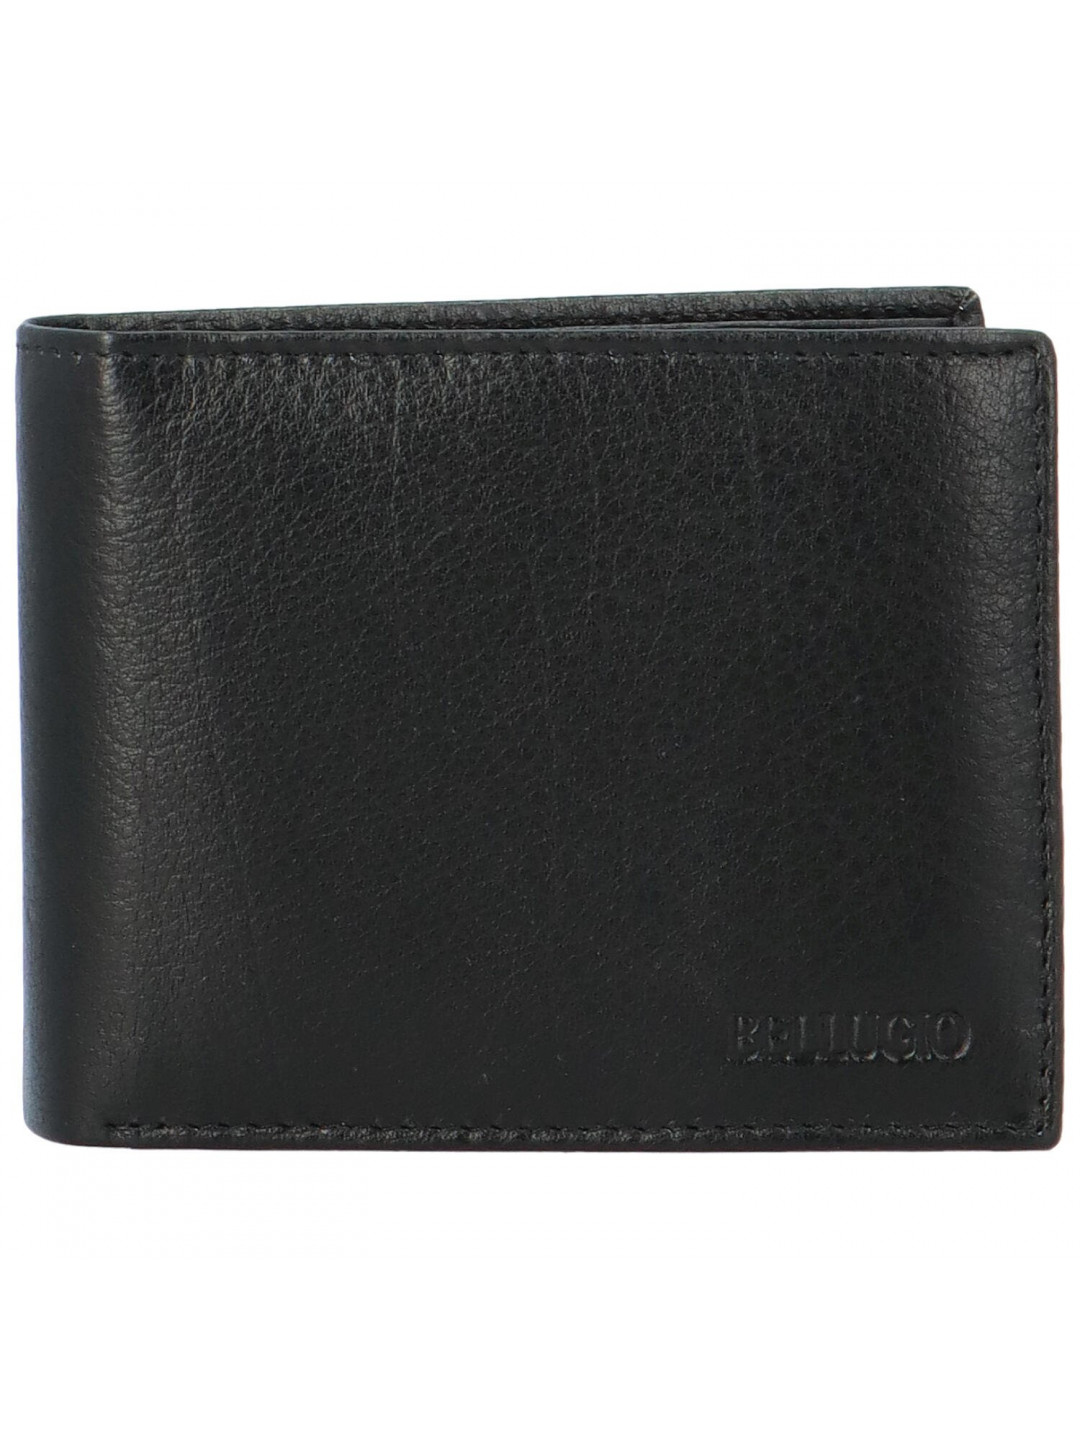 Pánská kožená peněženka černá – Bellugio Murmian